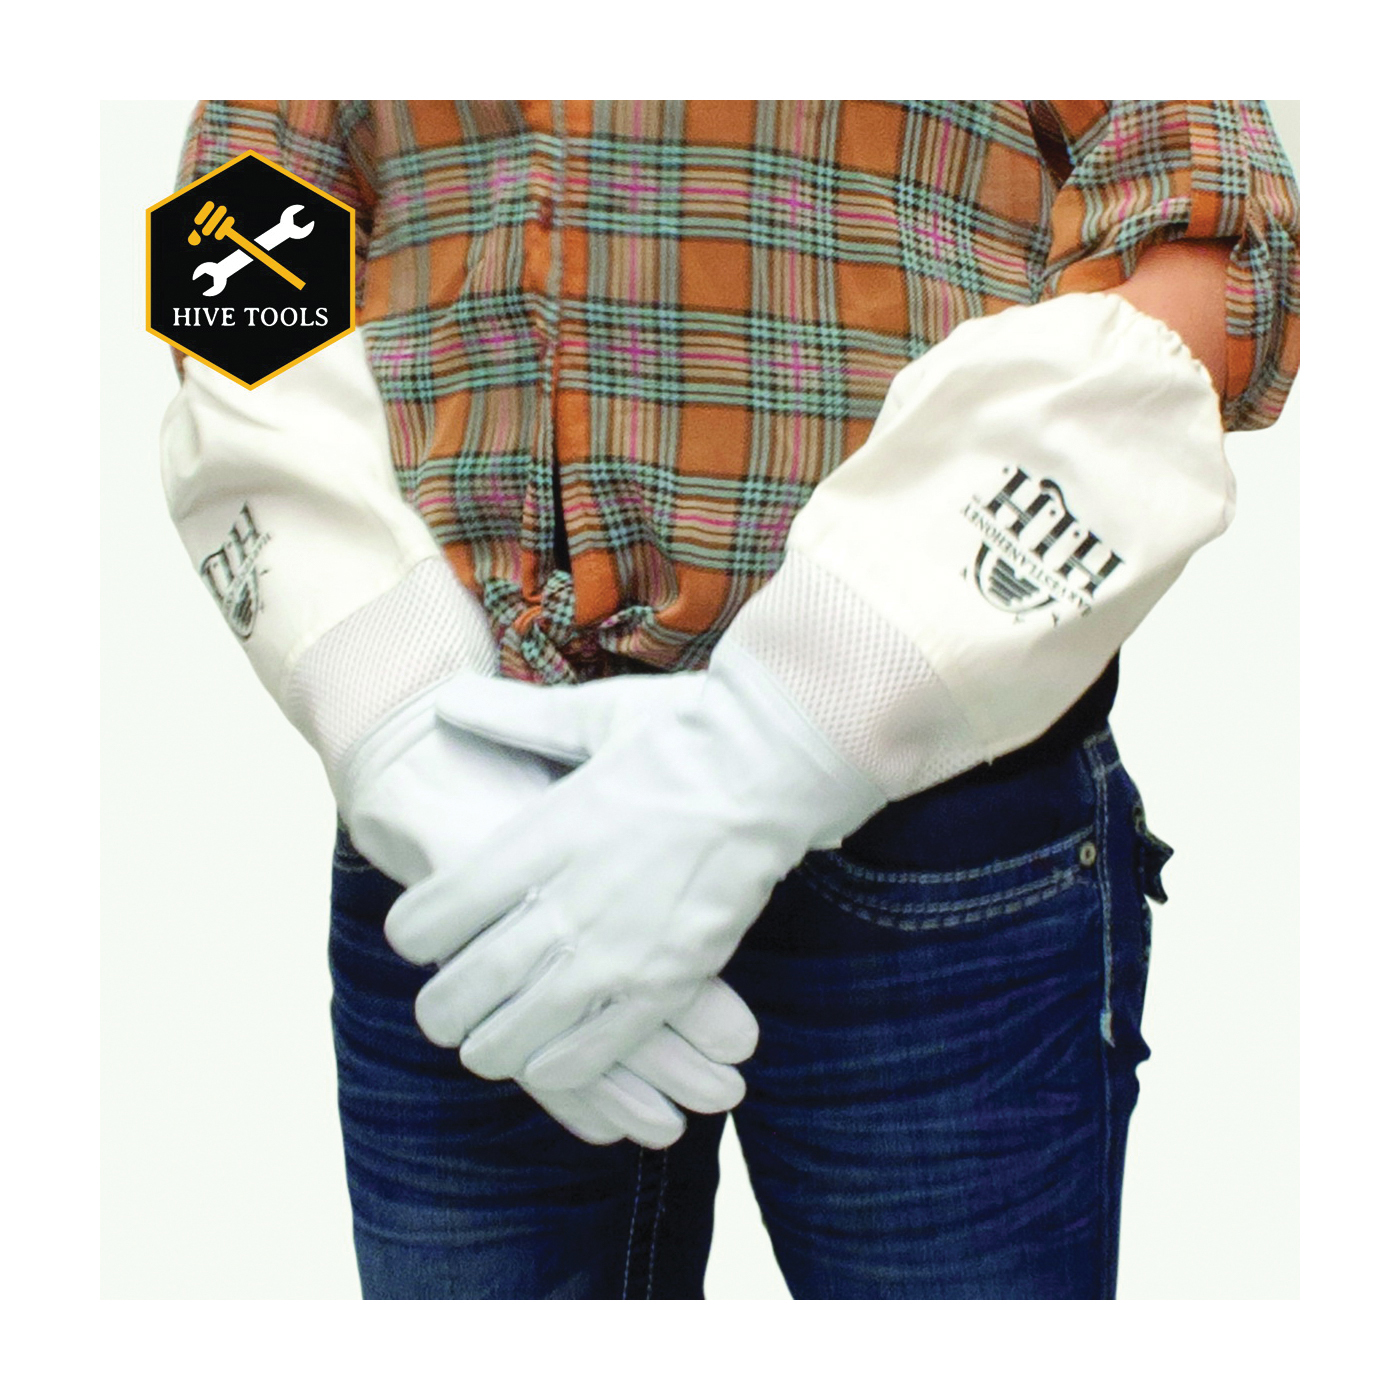 CLOTHGL-103 Beekeeping Gloves, L, Goatskin Leather/Polycotton